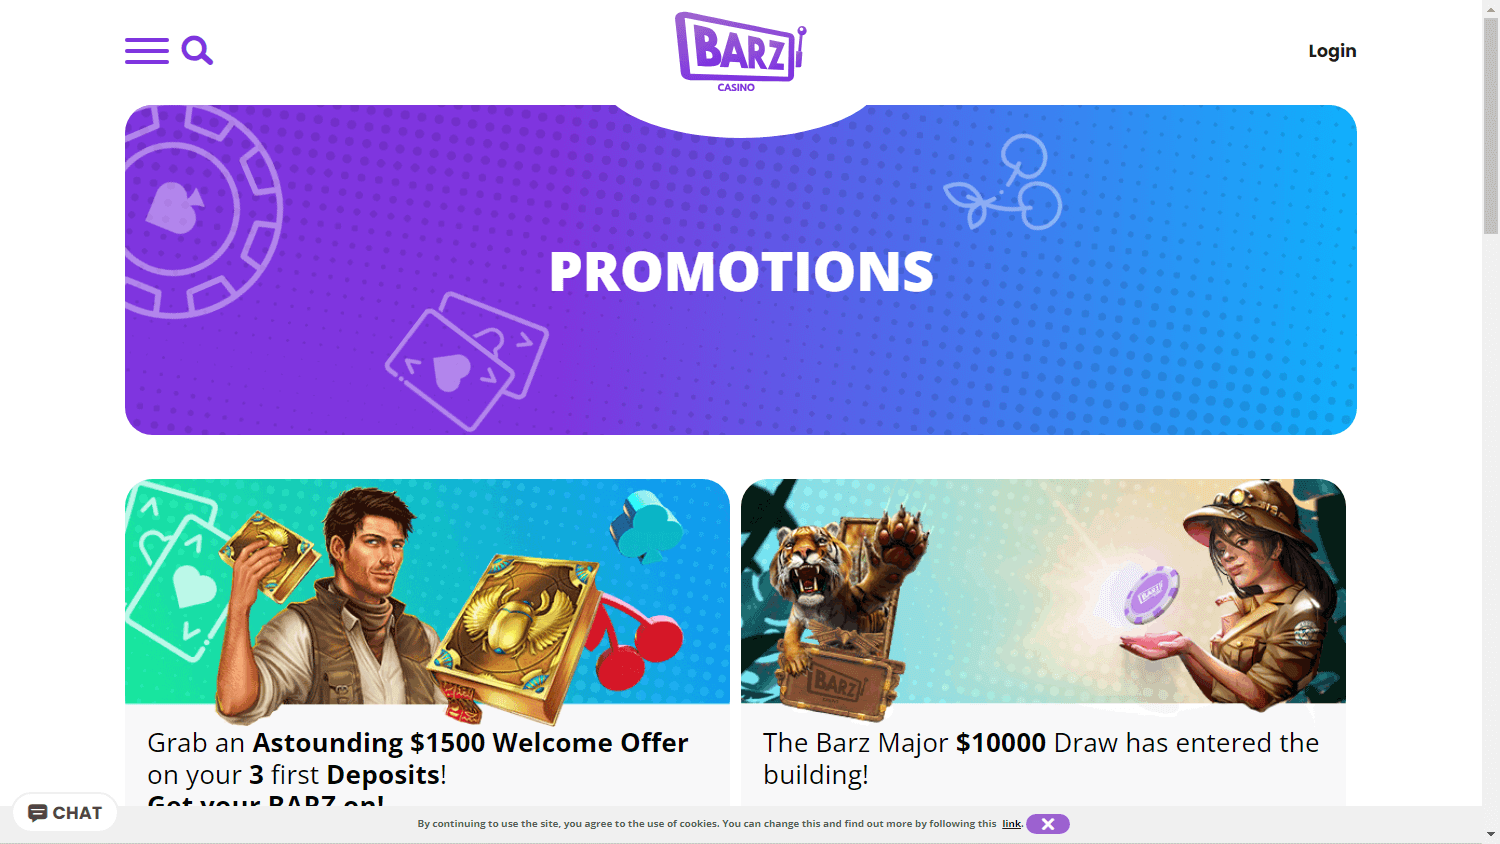 barz_casino_promotions_desktop